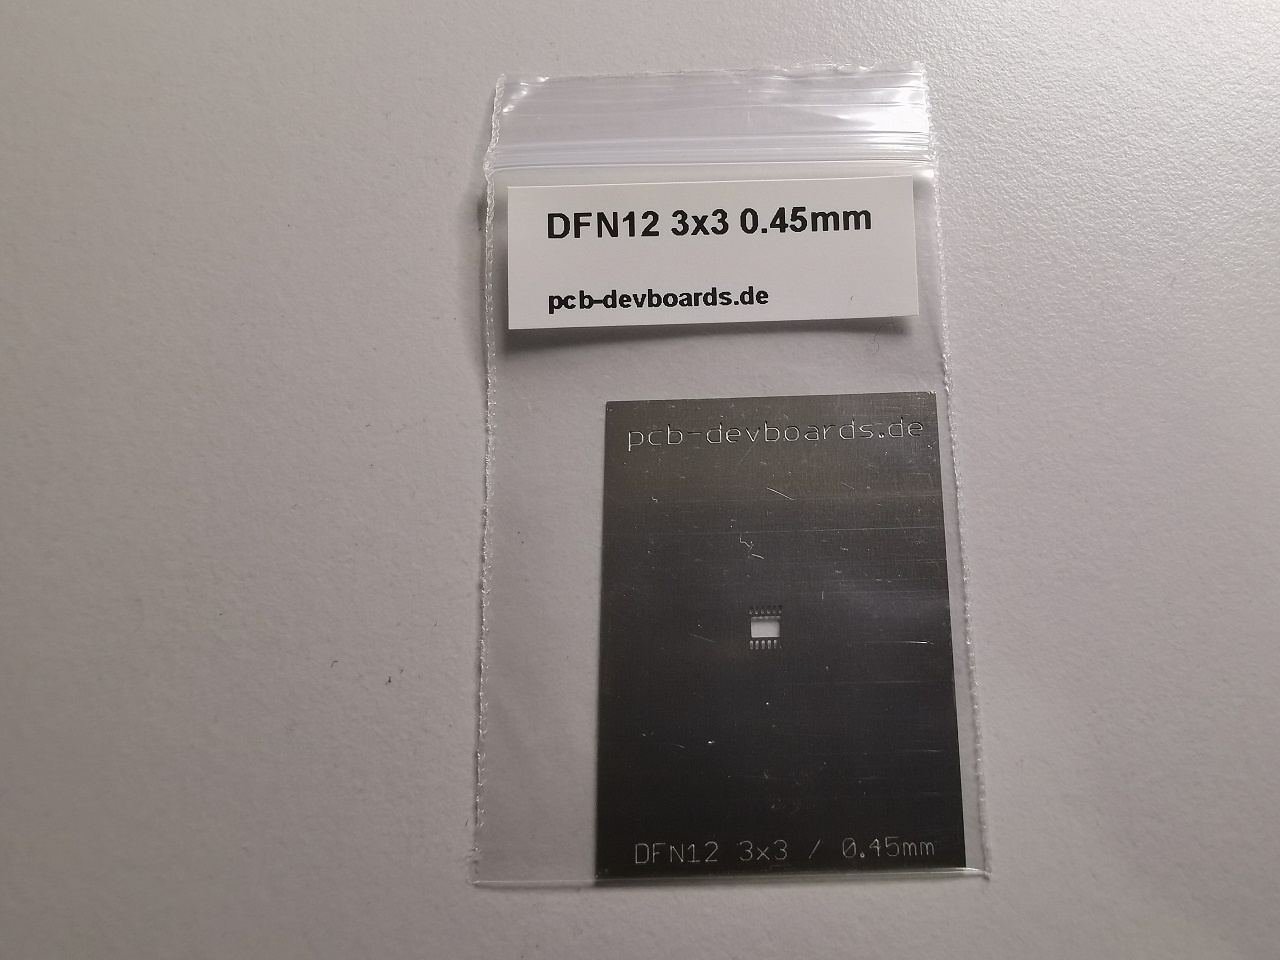 DFN12 3x3mm 0.45mm, SMD stencil